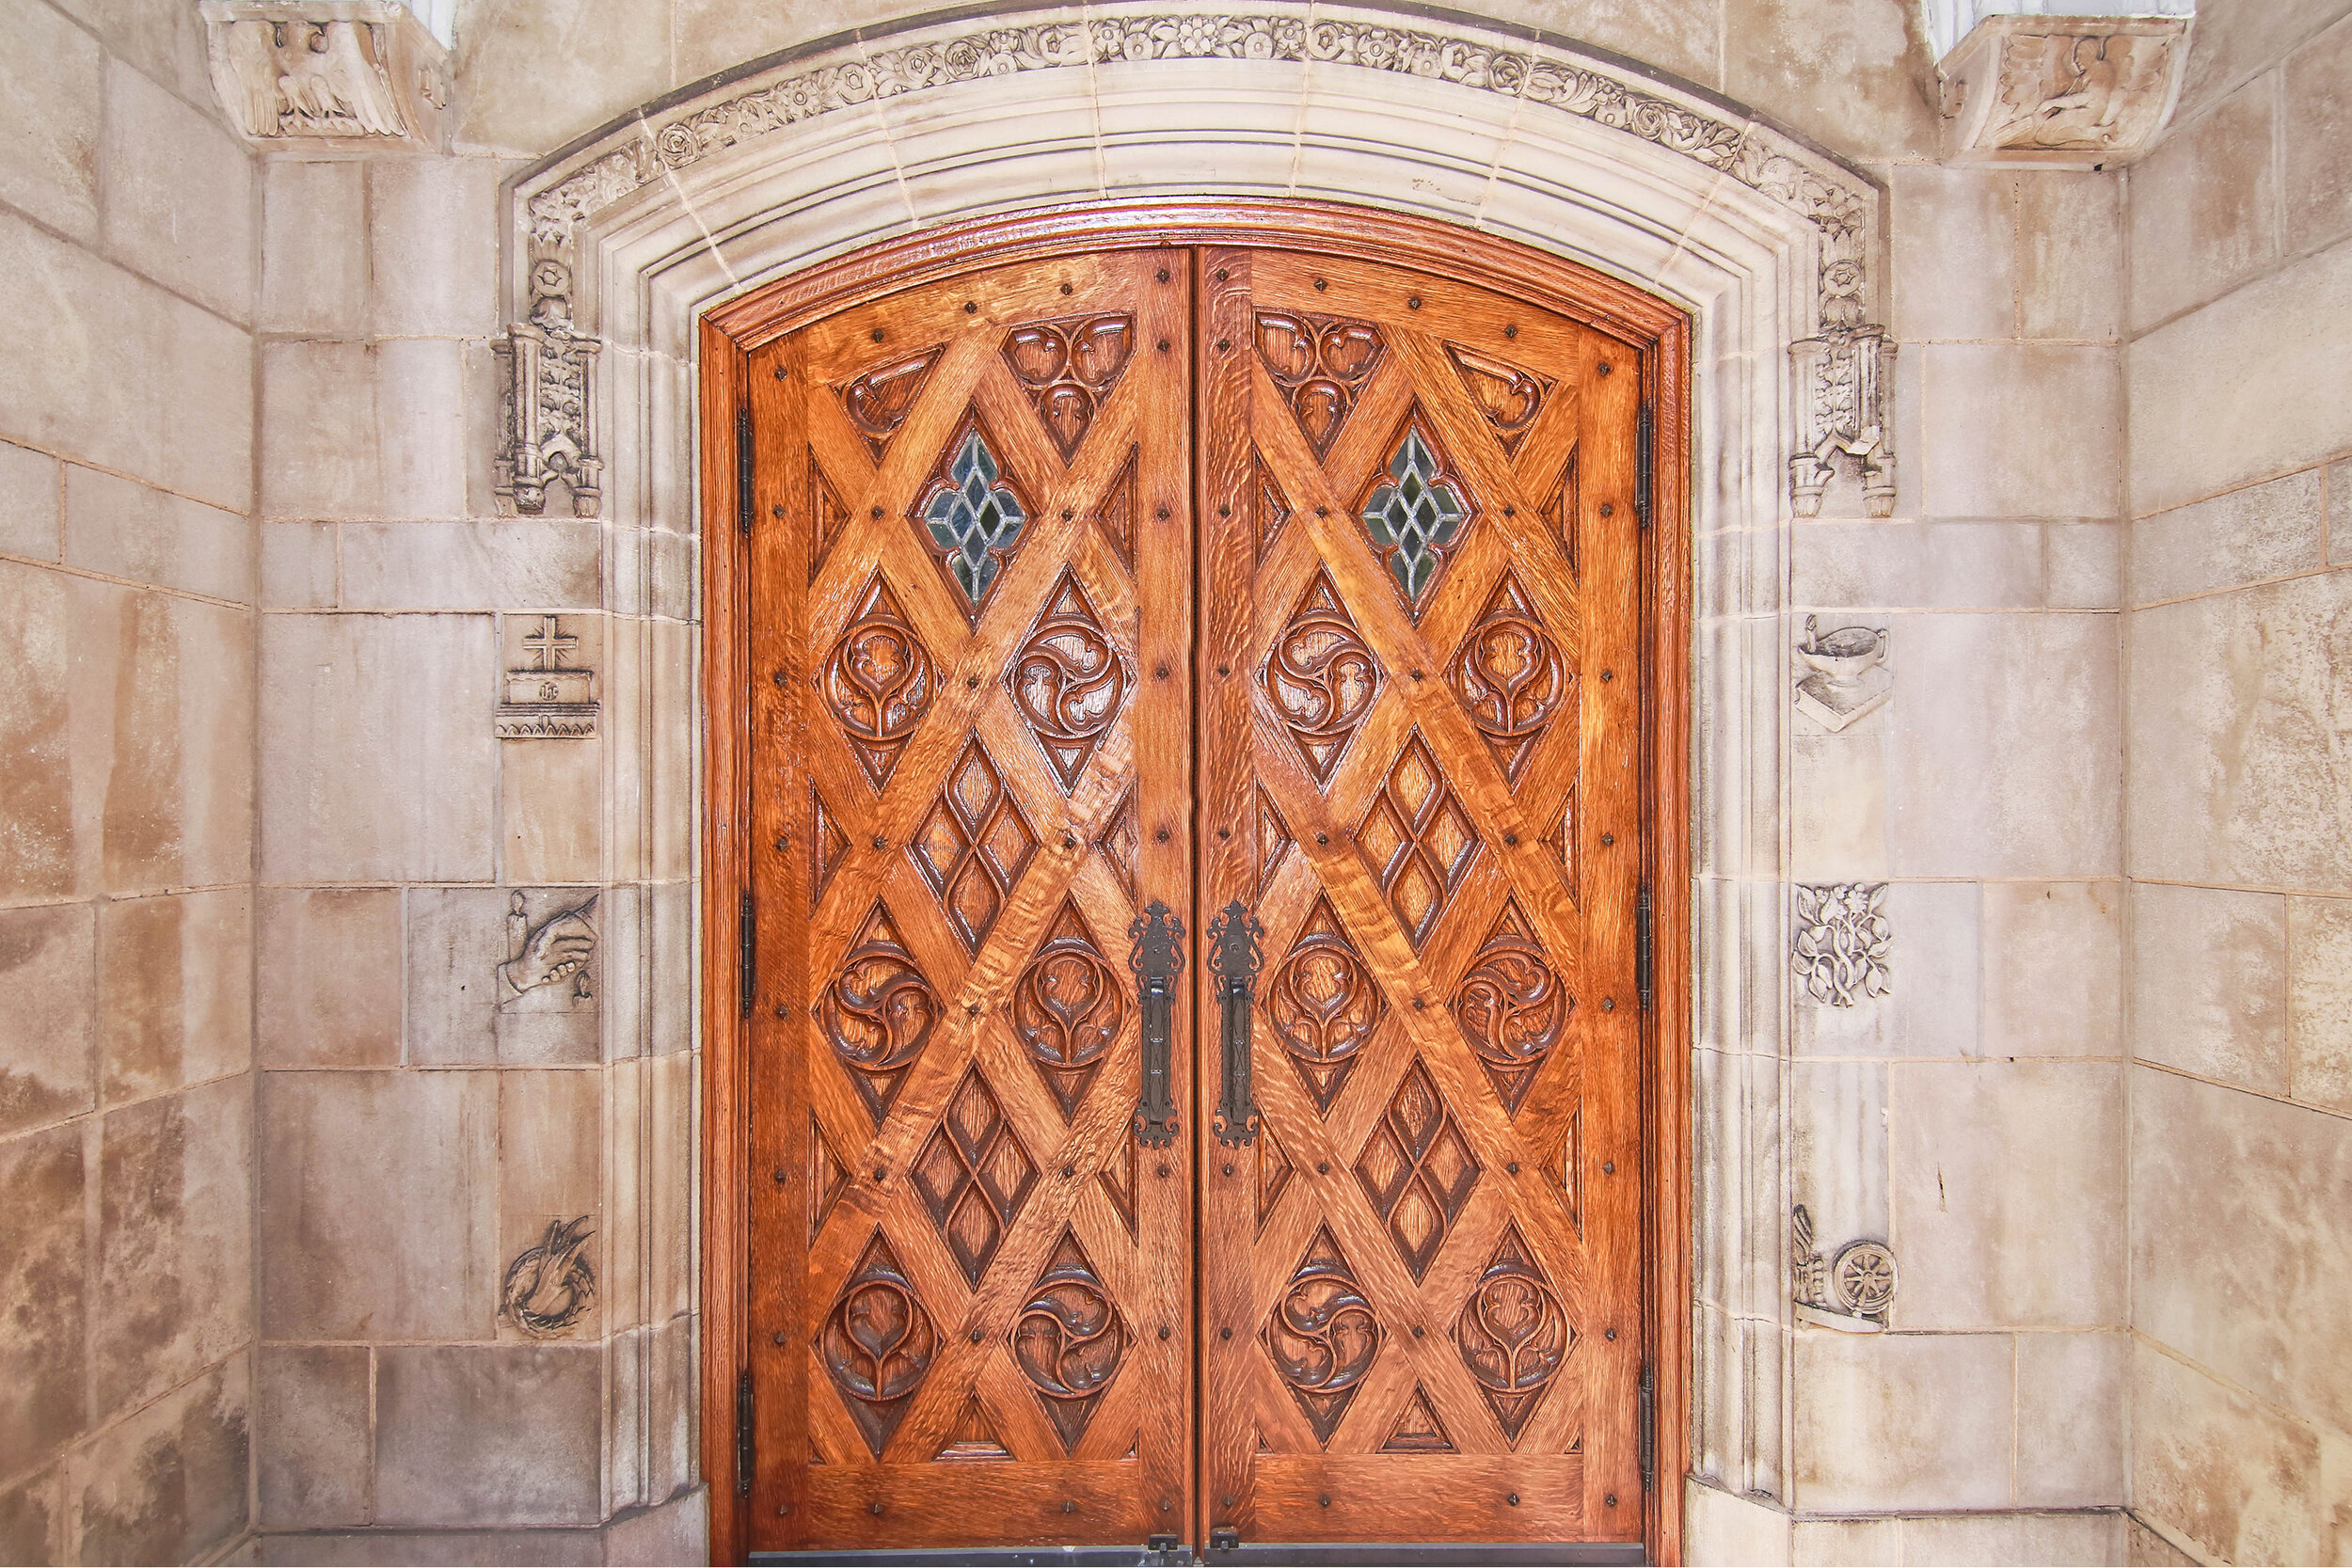 historical-landmark-restoration-door-installation-near-chicago-il-by-meyer-guild.jpg